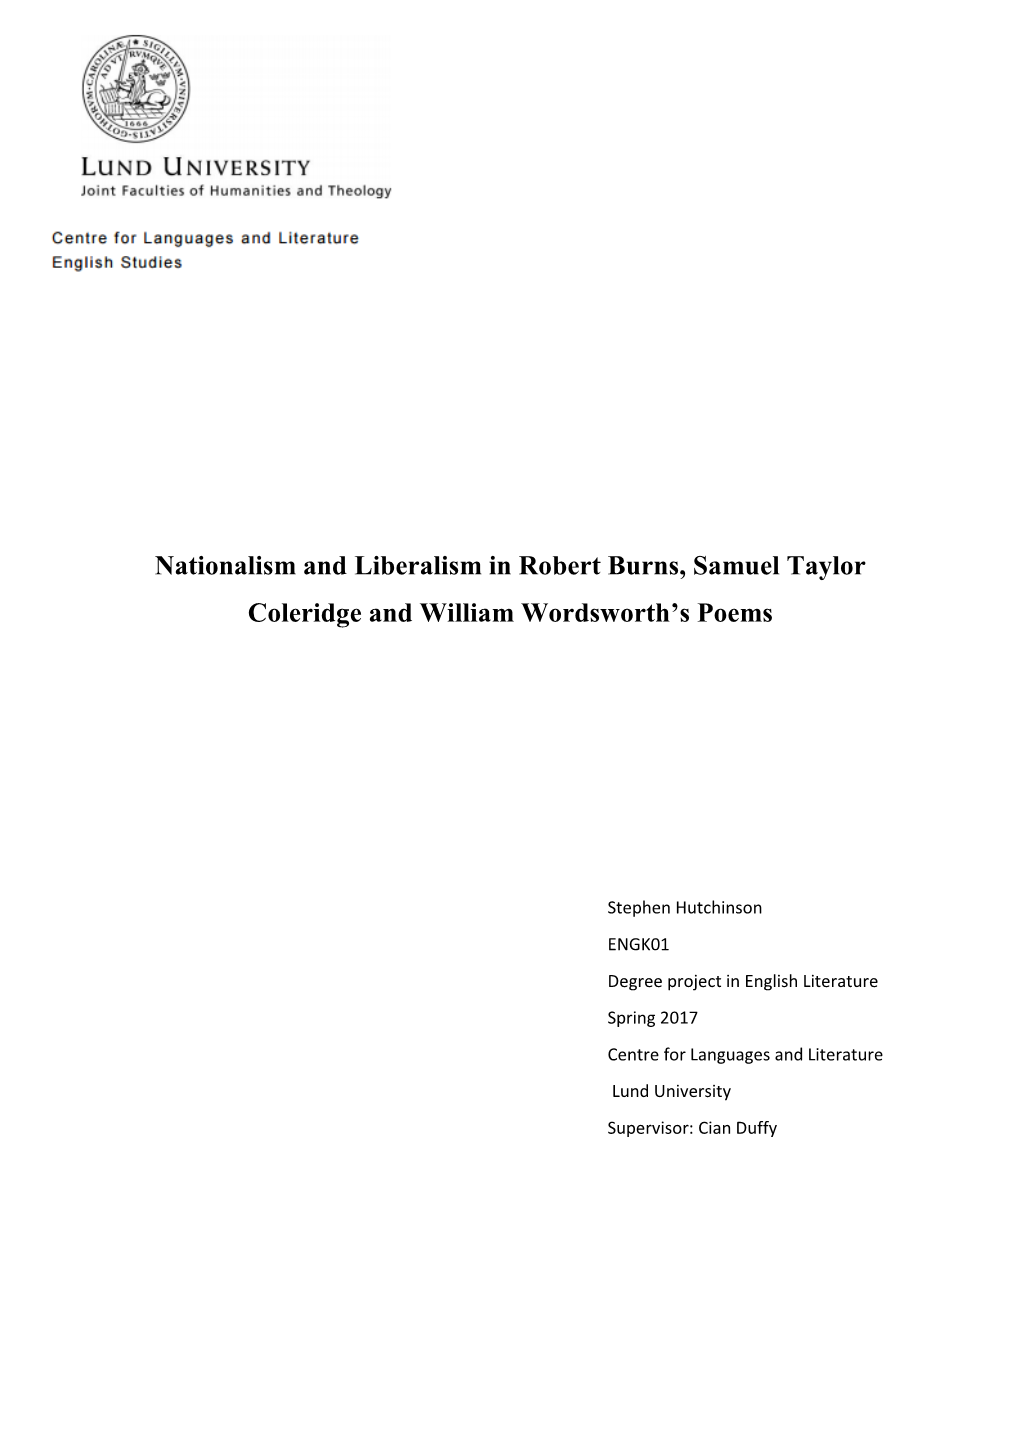 Nationalism and Liberalism in Robert Burns, Samuel Taylor Coleridge and William Wordsworth’S Poems